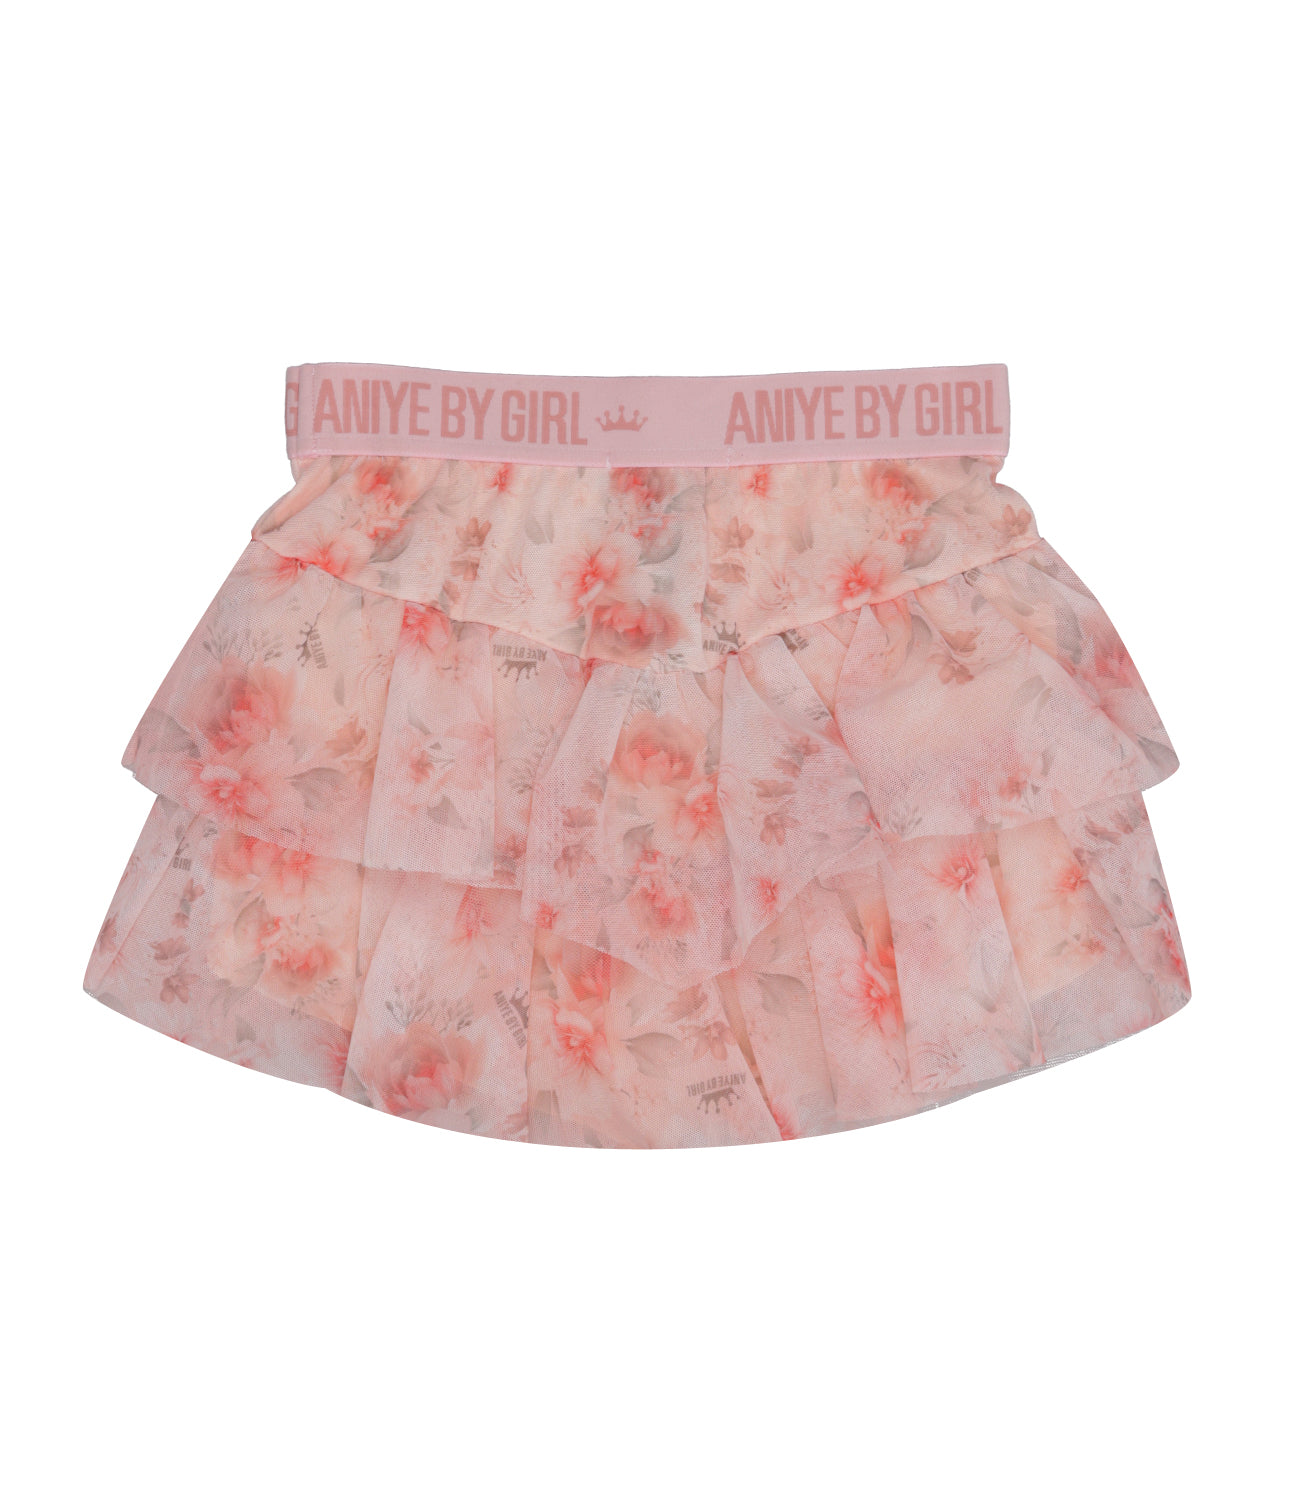 Aniye By Girl | Antique Pink Skirt